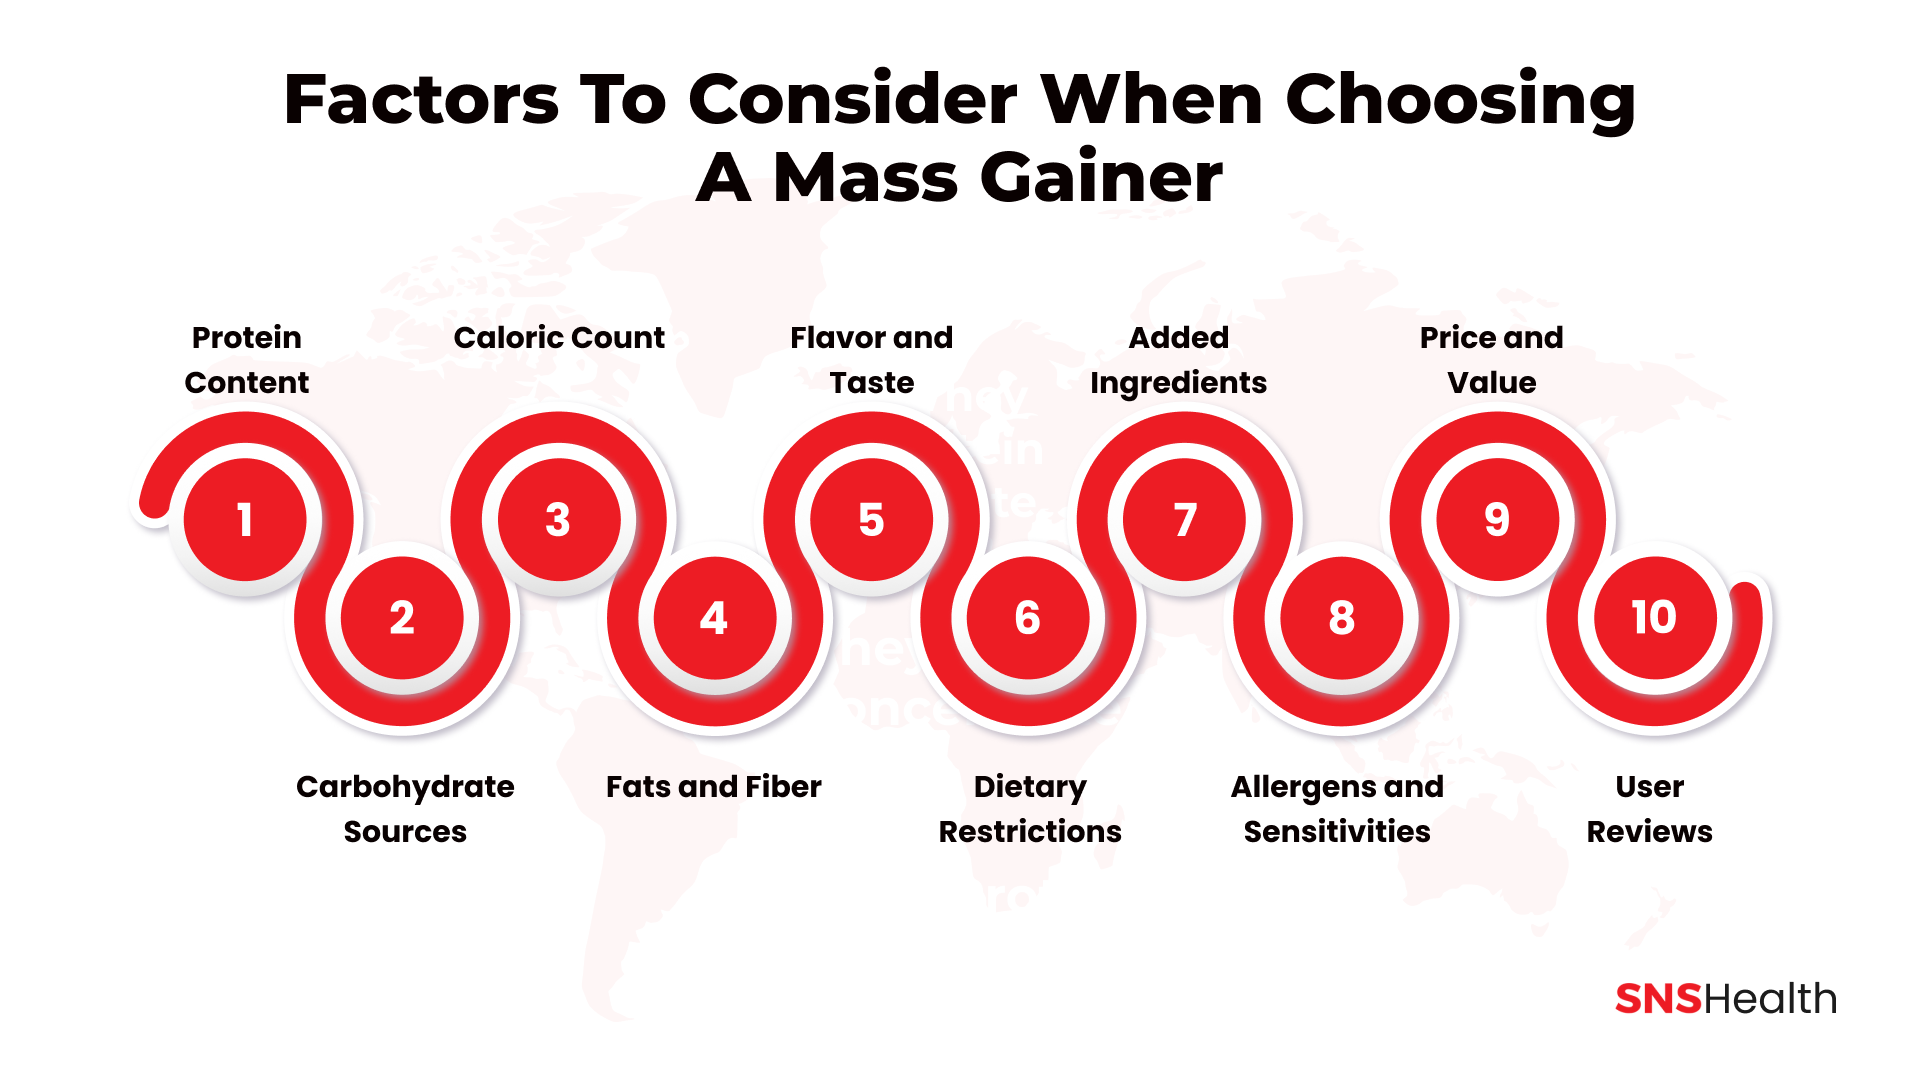 Factors to Consider When Choosing a Mass Gainer